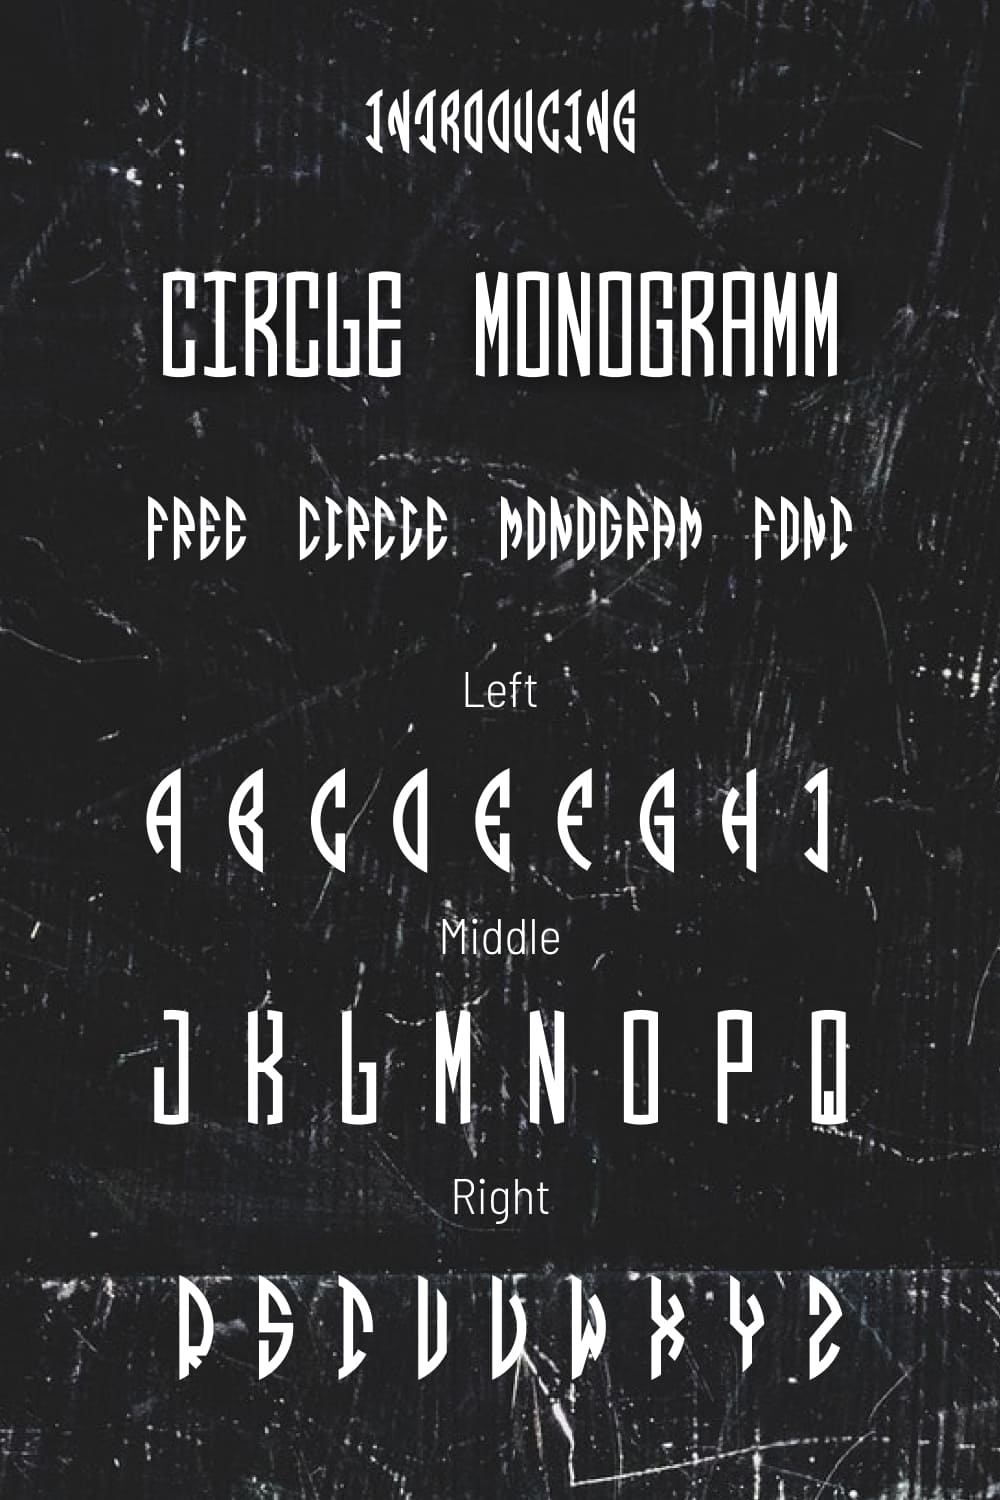 Pinterest alphabet example Free circle monogram font by MasterBundles.